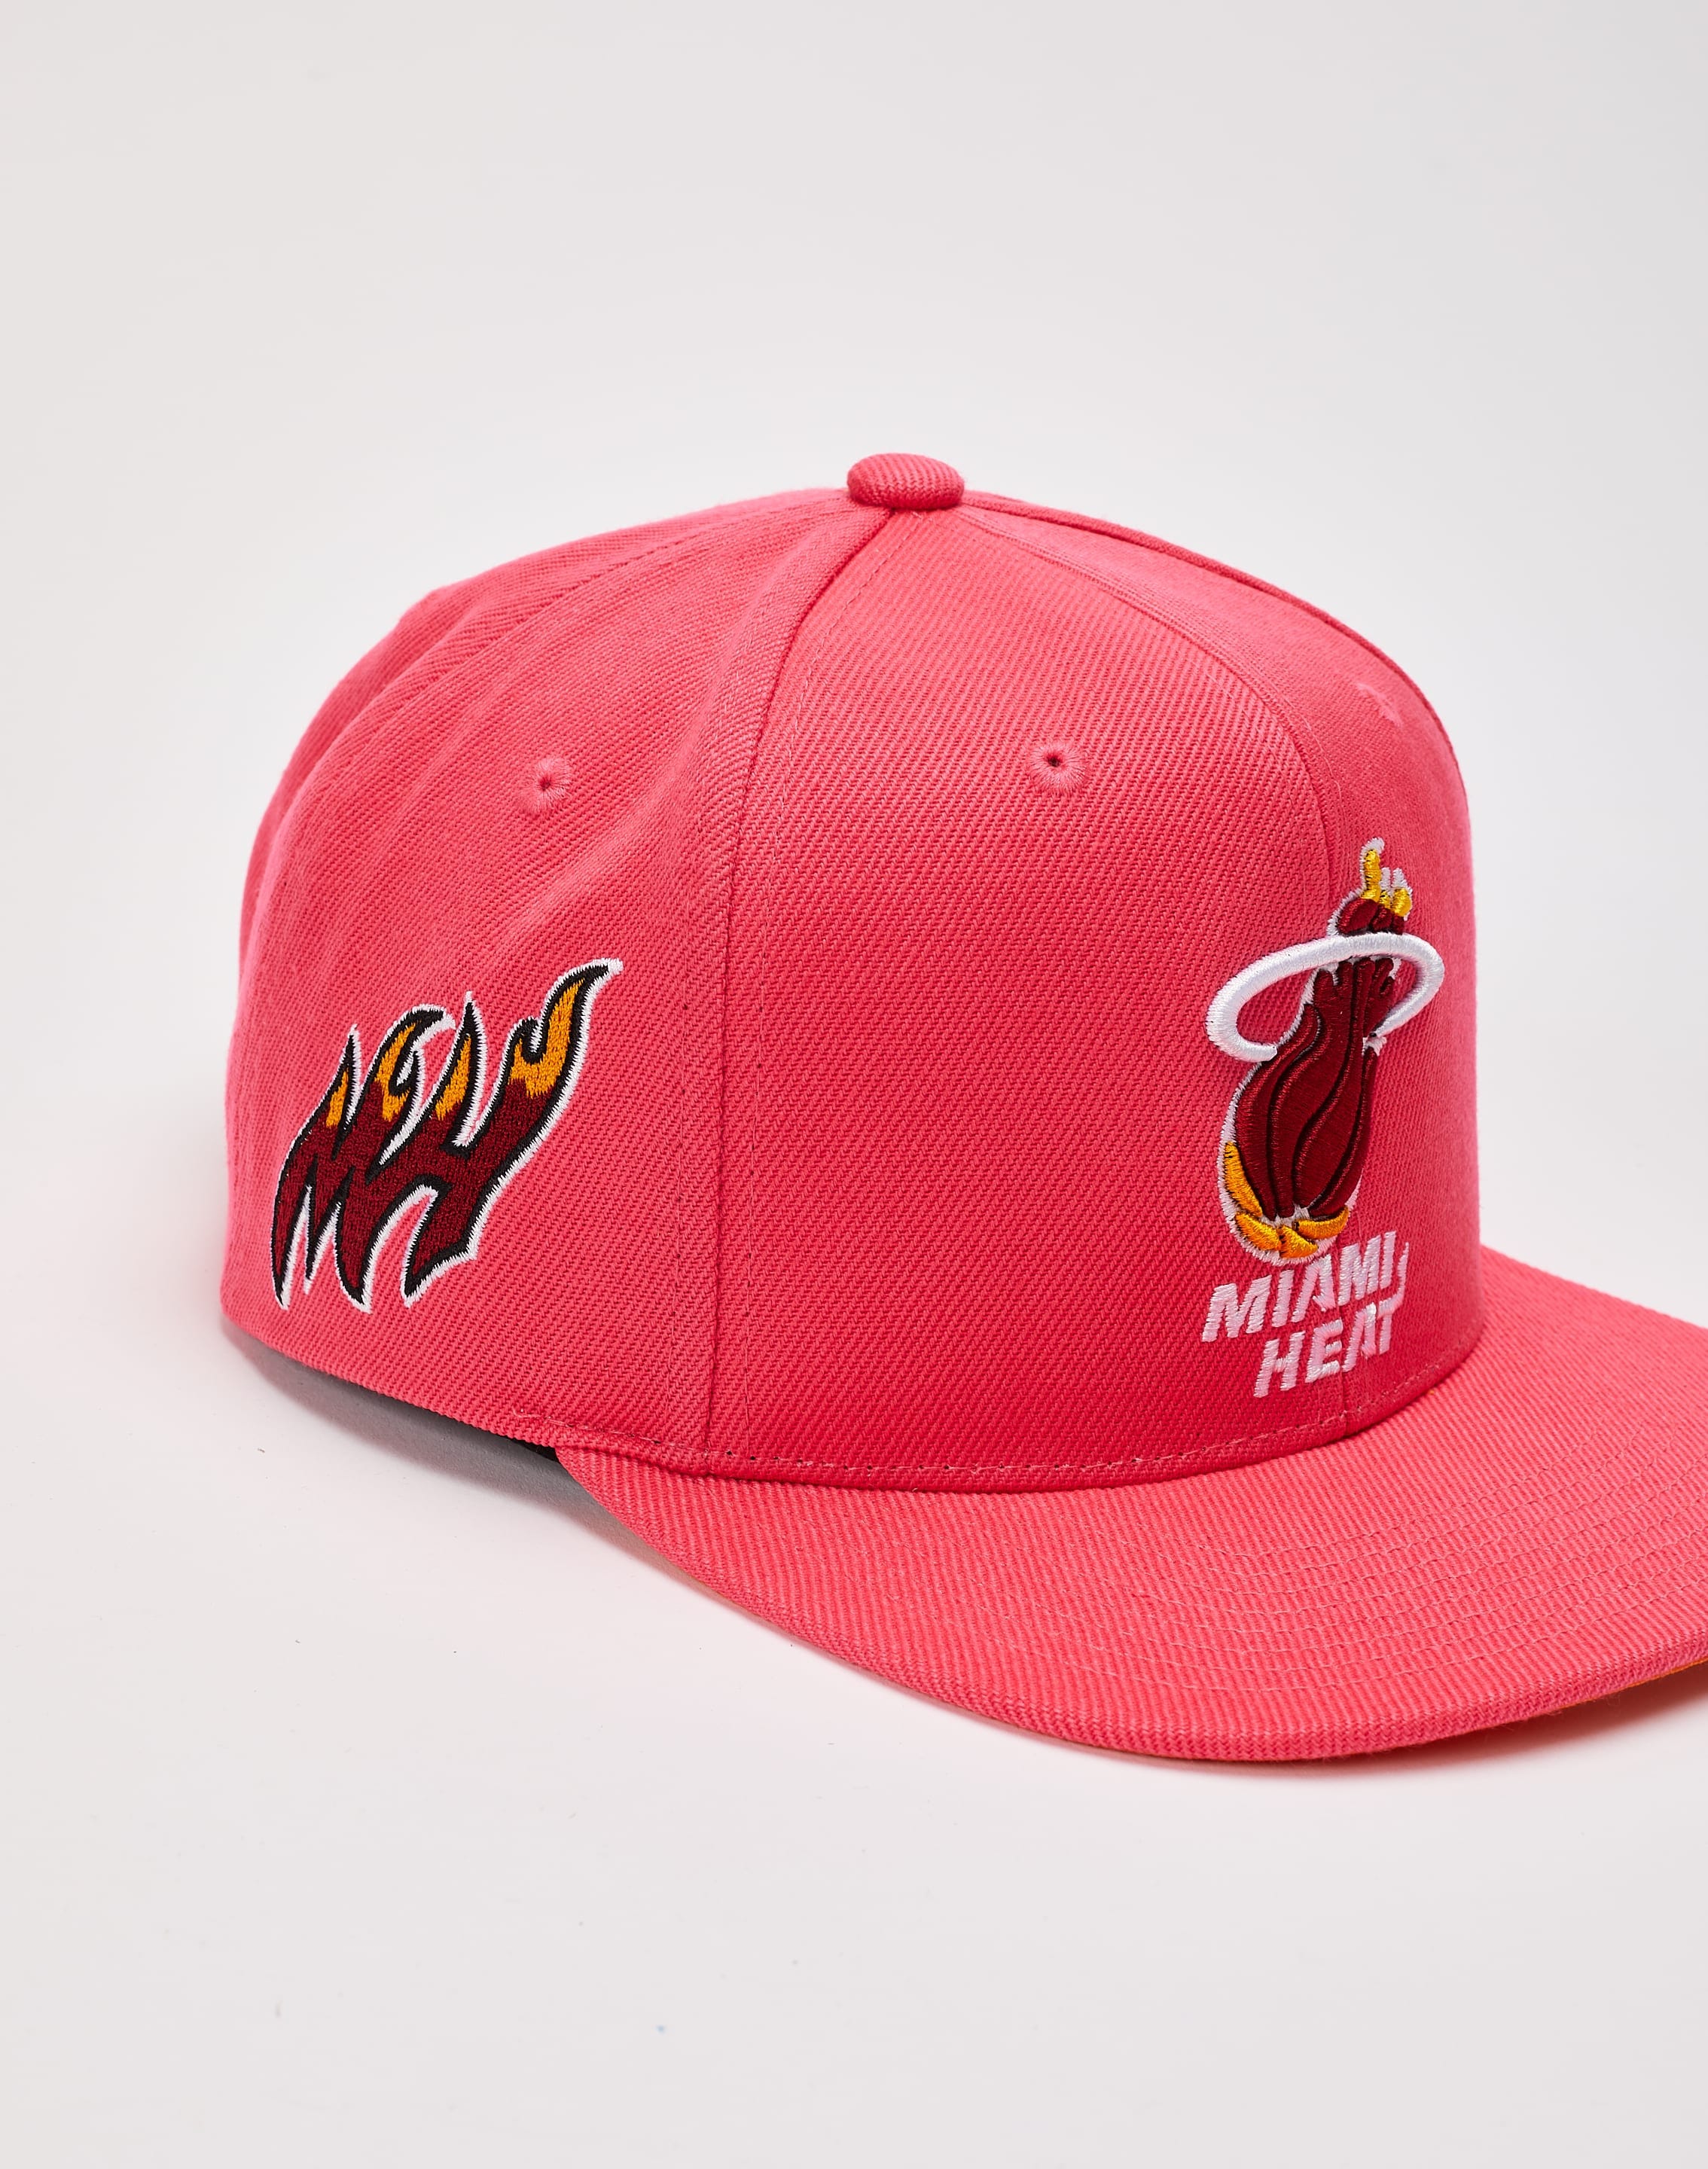 Miami Heat Mitchell & Ness Snapback Hat Black/Pink/Turquoise Basketball Cap